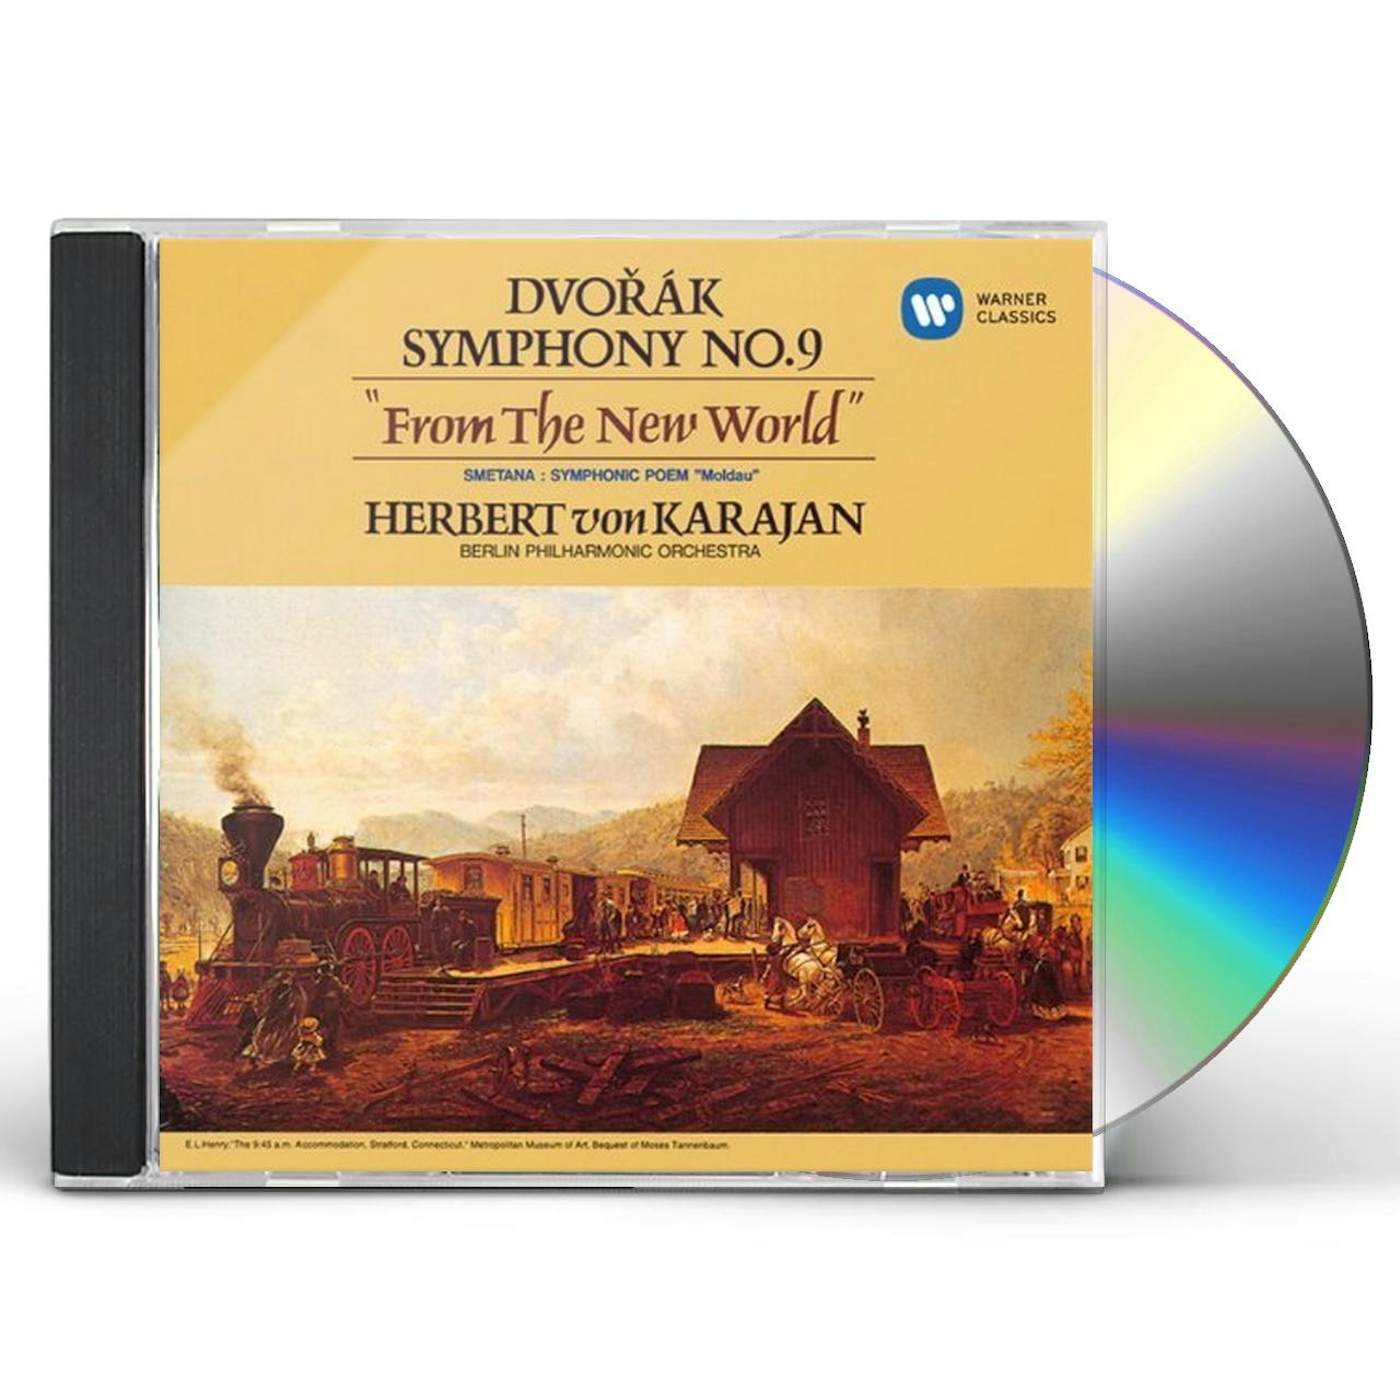 Herbert von Karajan DVORAK: SYMPHONY NO.9 'FROM THE NEW WORLD' CD